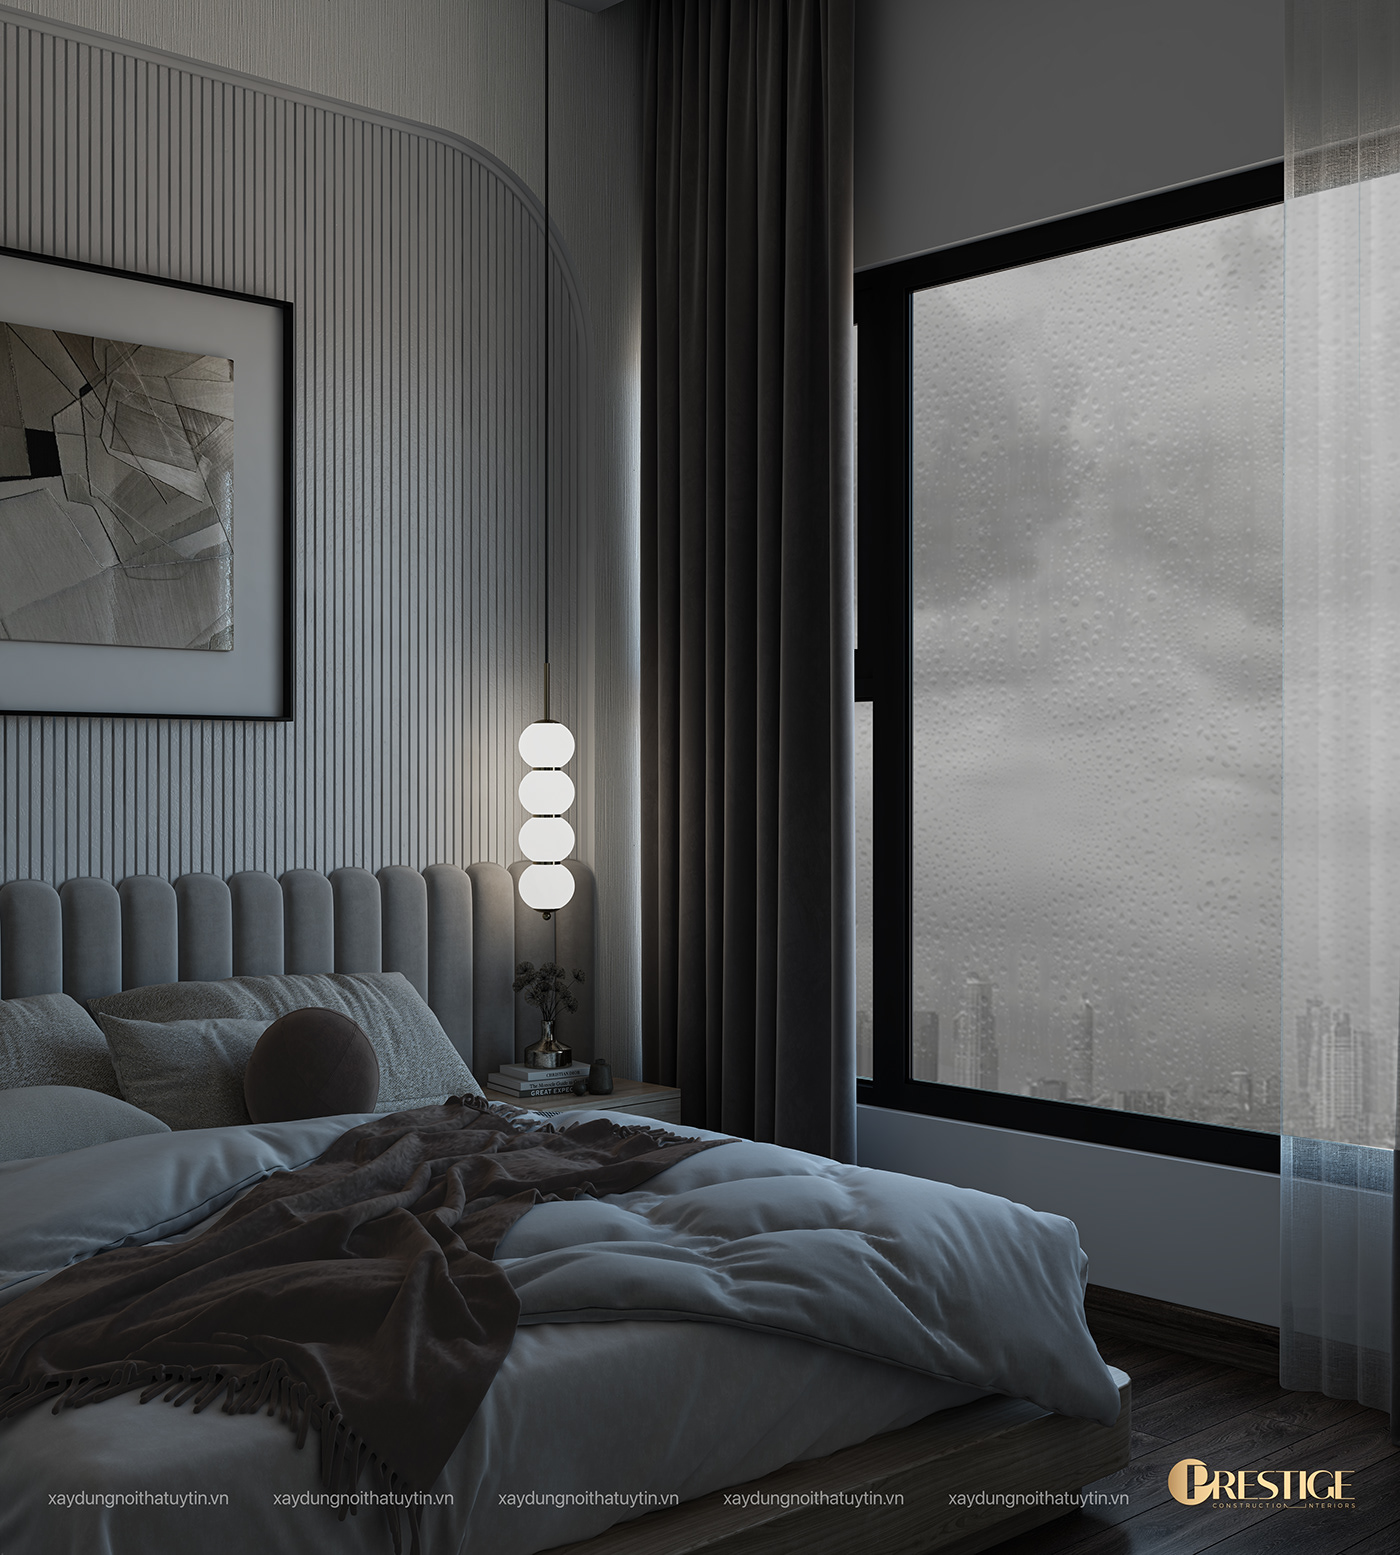 3ds max vray photoshop bedroom bedroom design interior design  rain